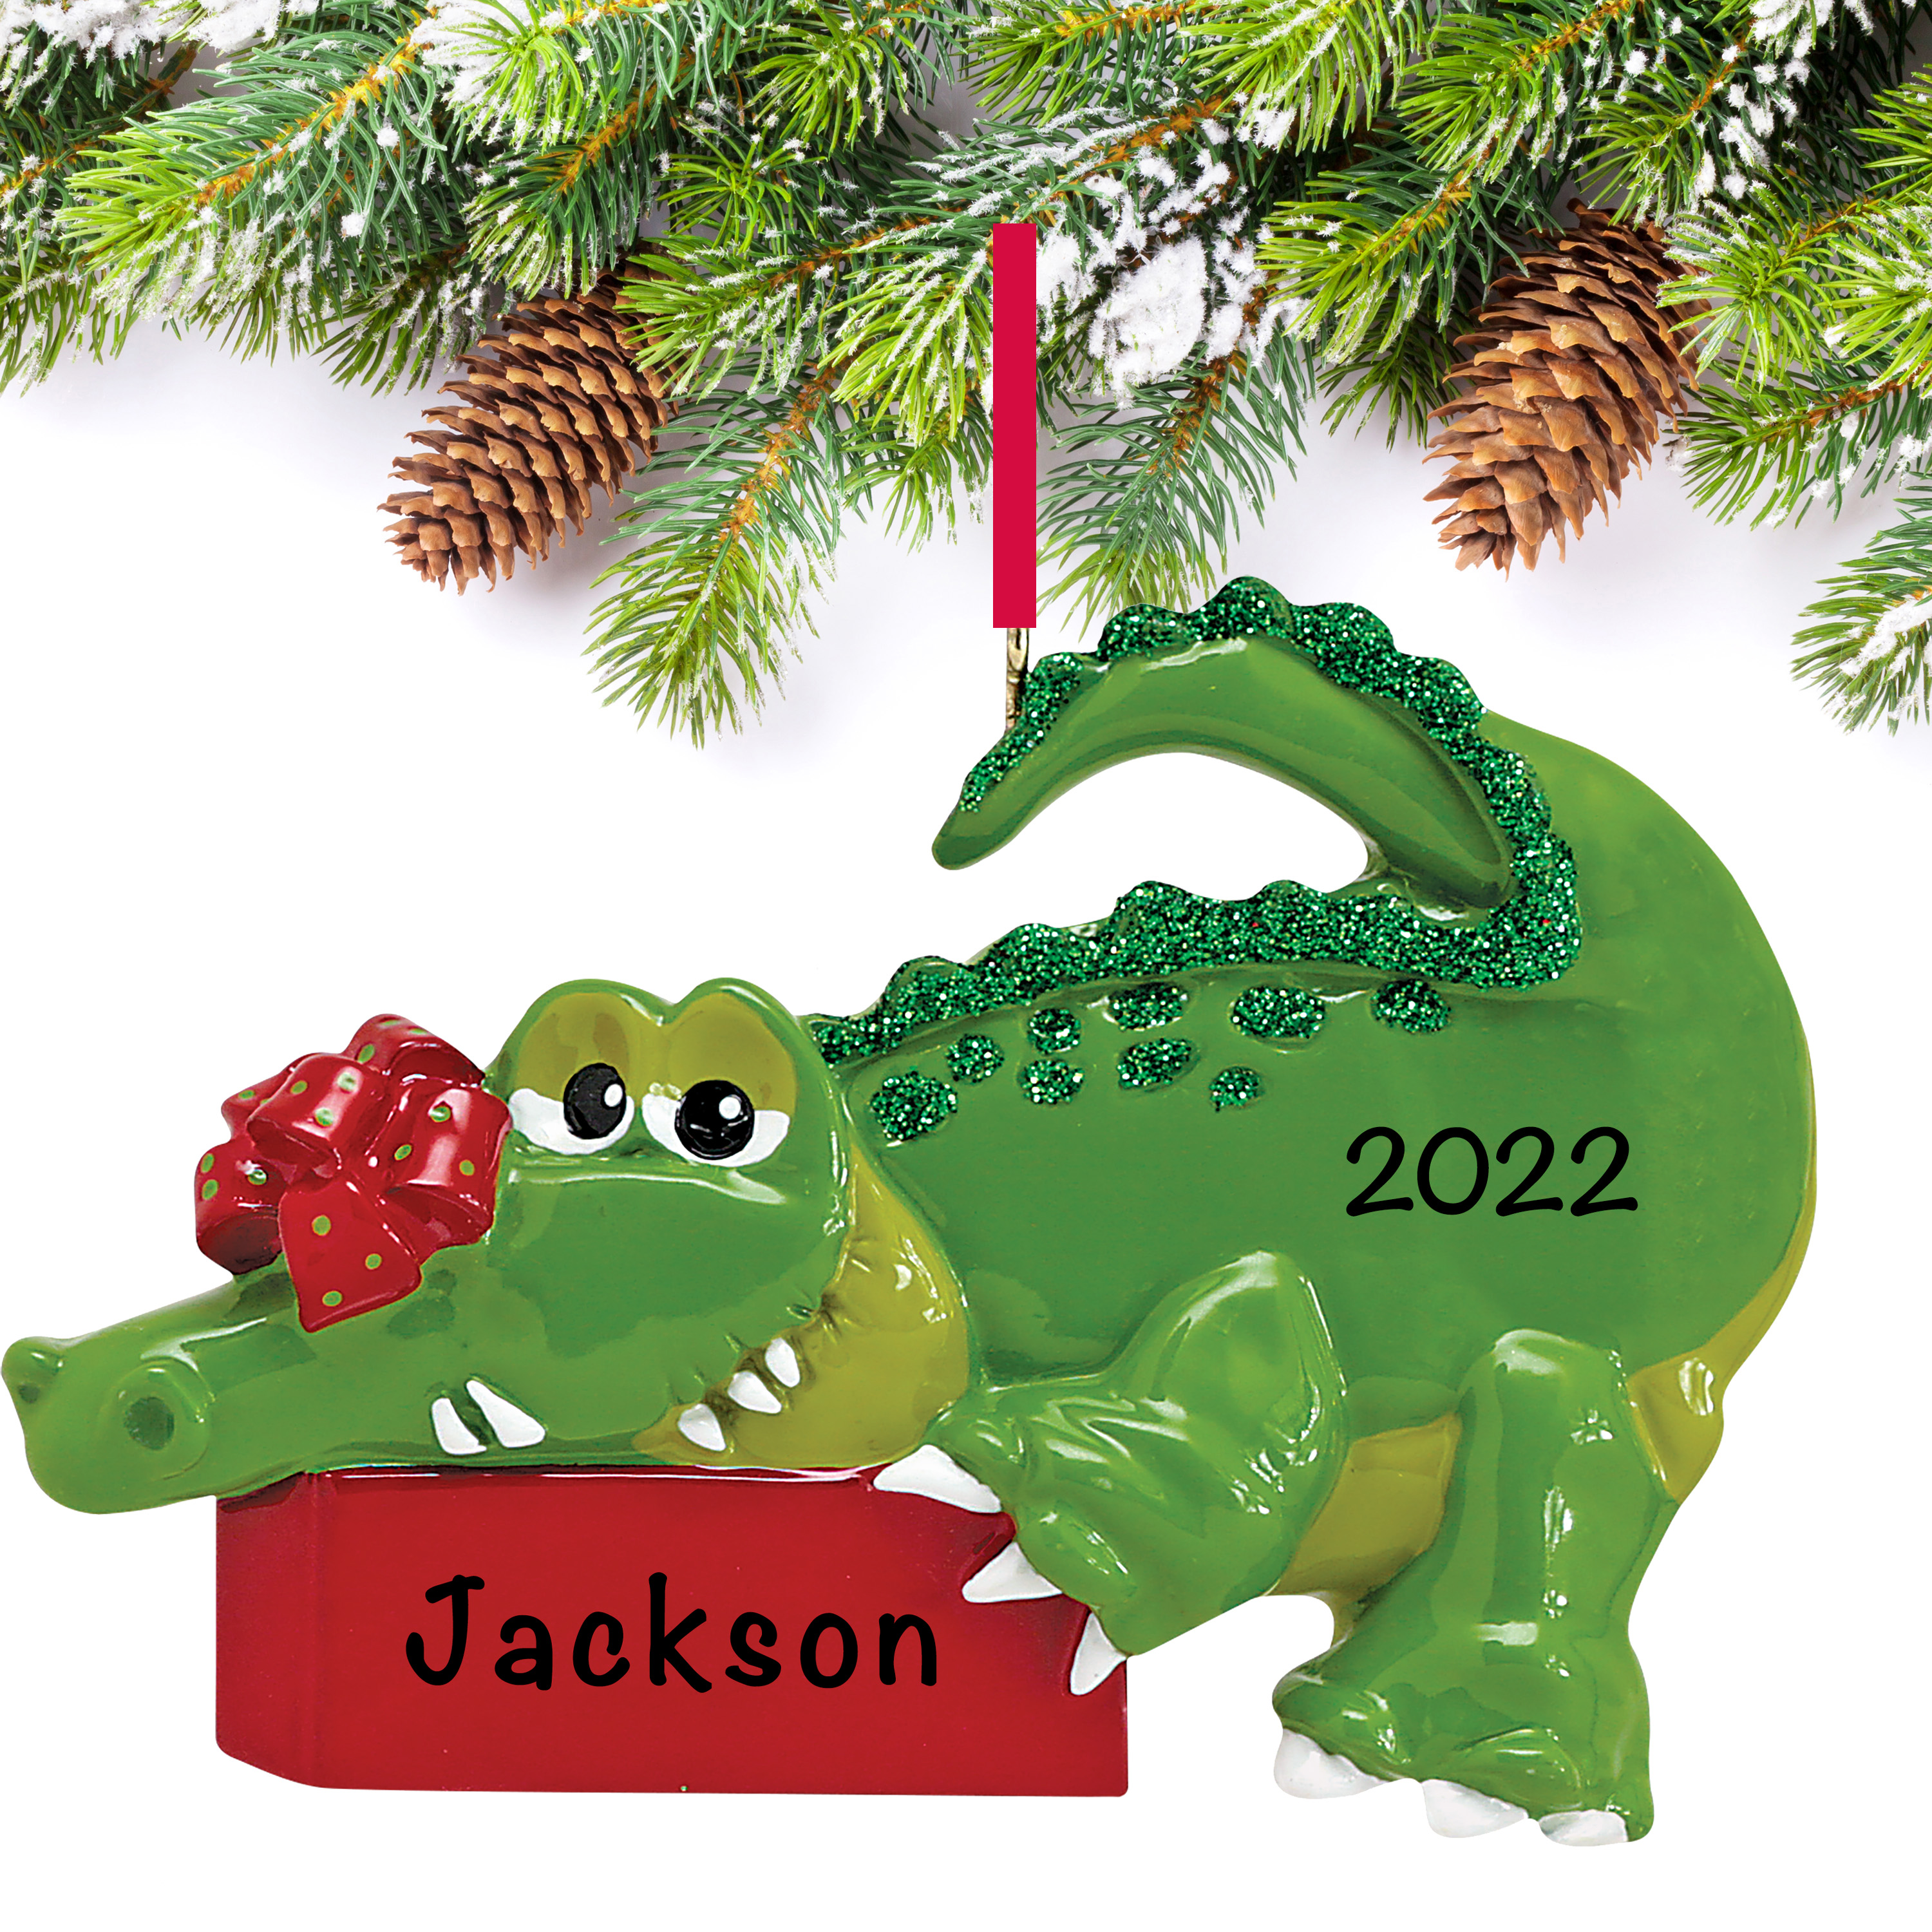 Alligator Ornament